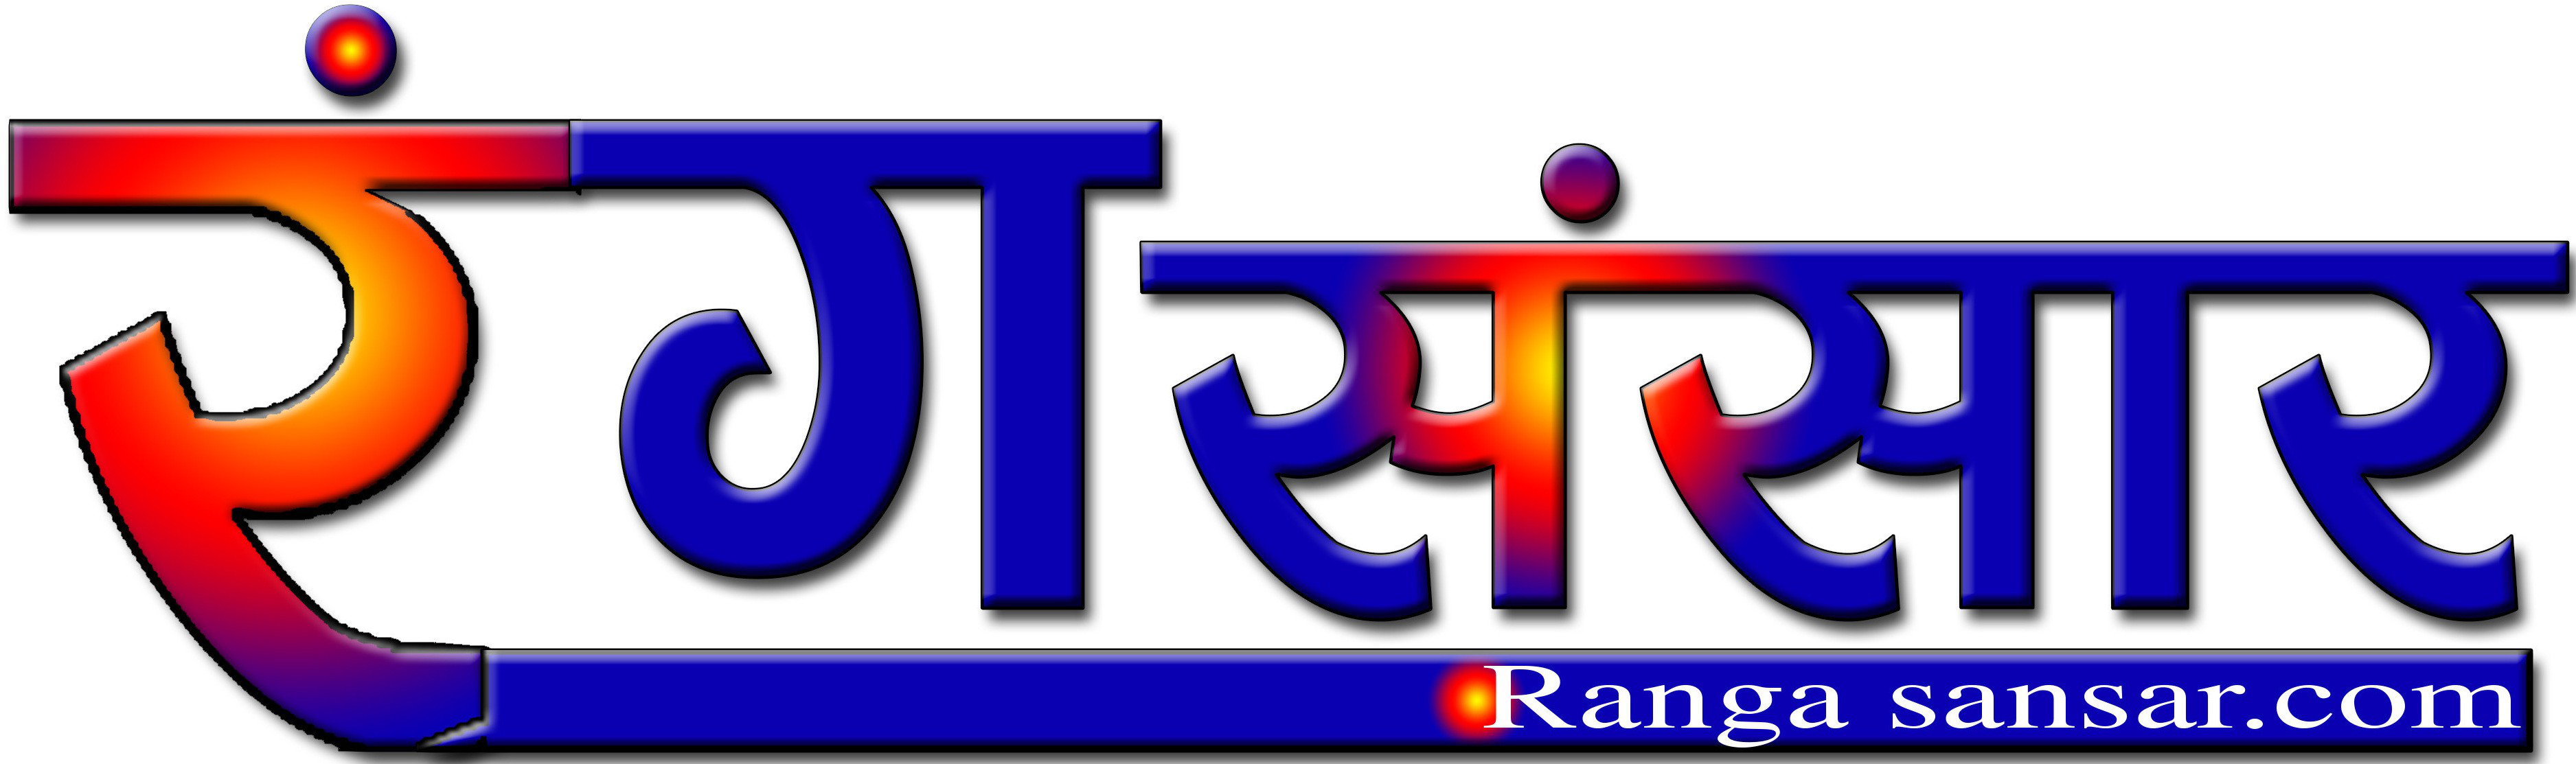 Ranga Sansar - A entertainment magazine